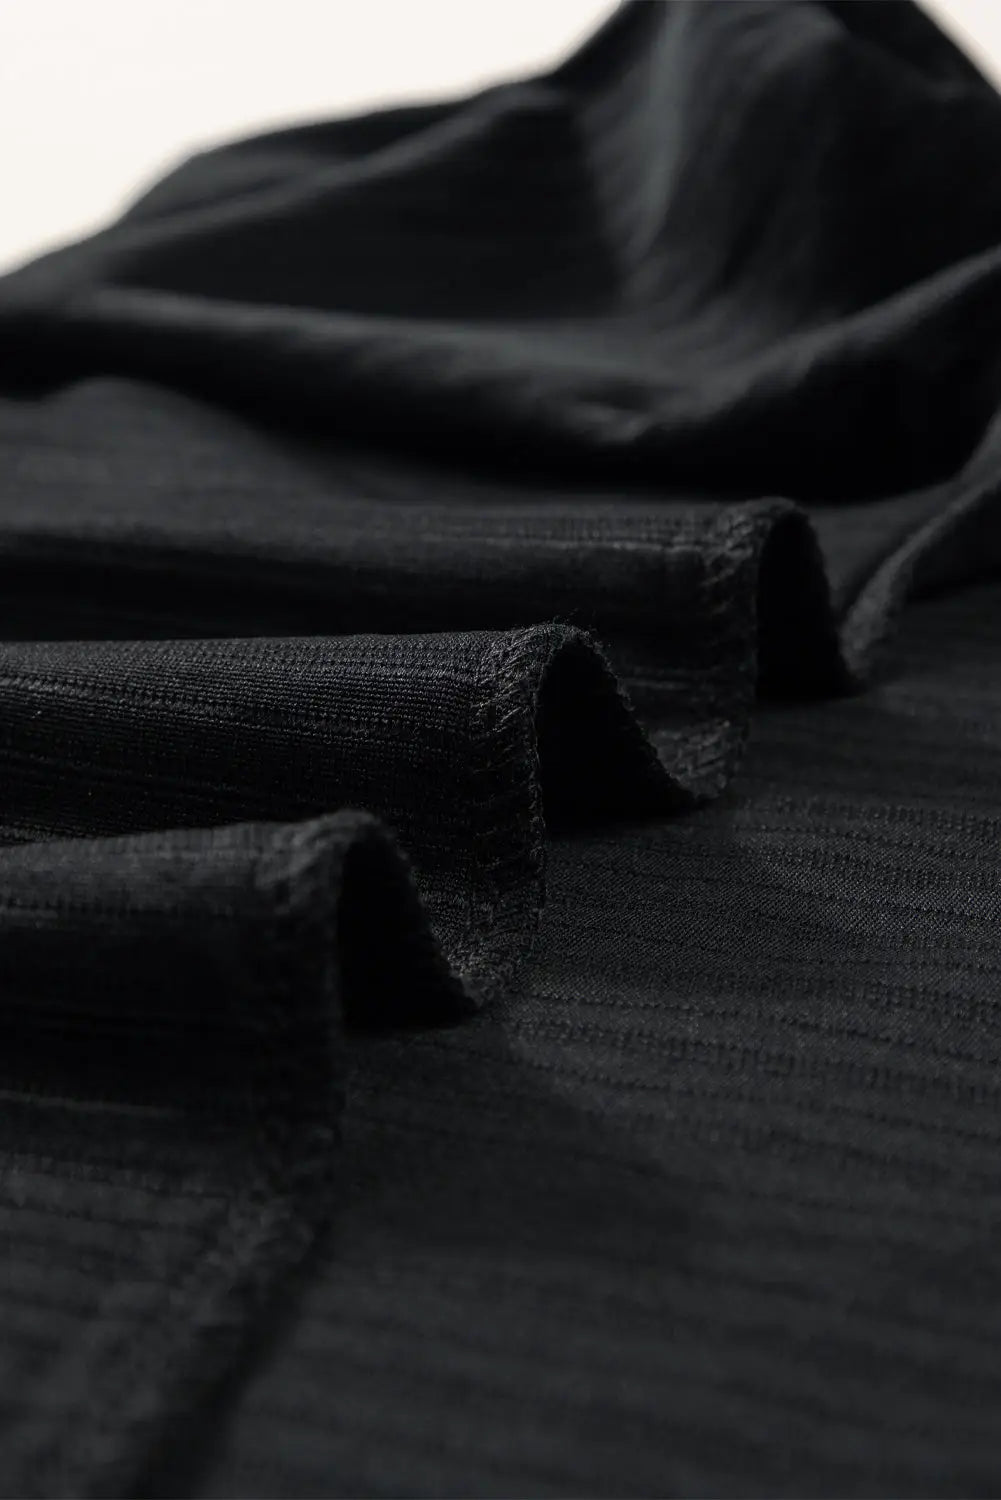 Beauty in black t shirt - tops/tops & tees